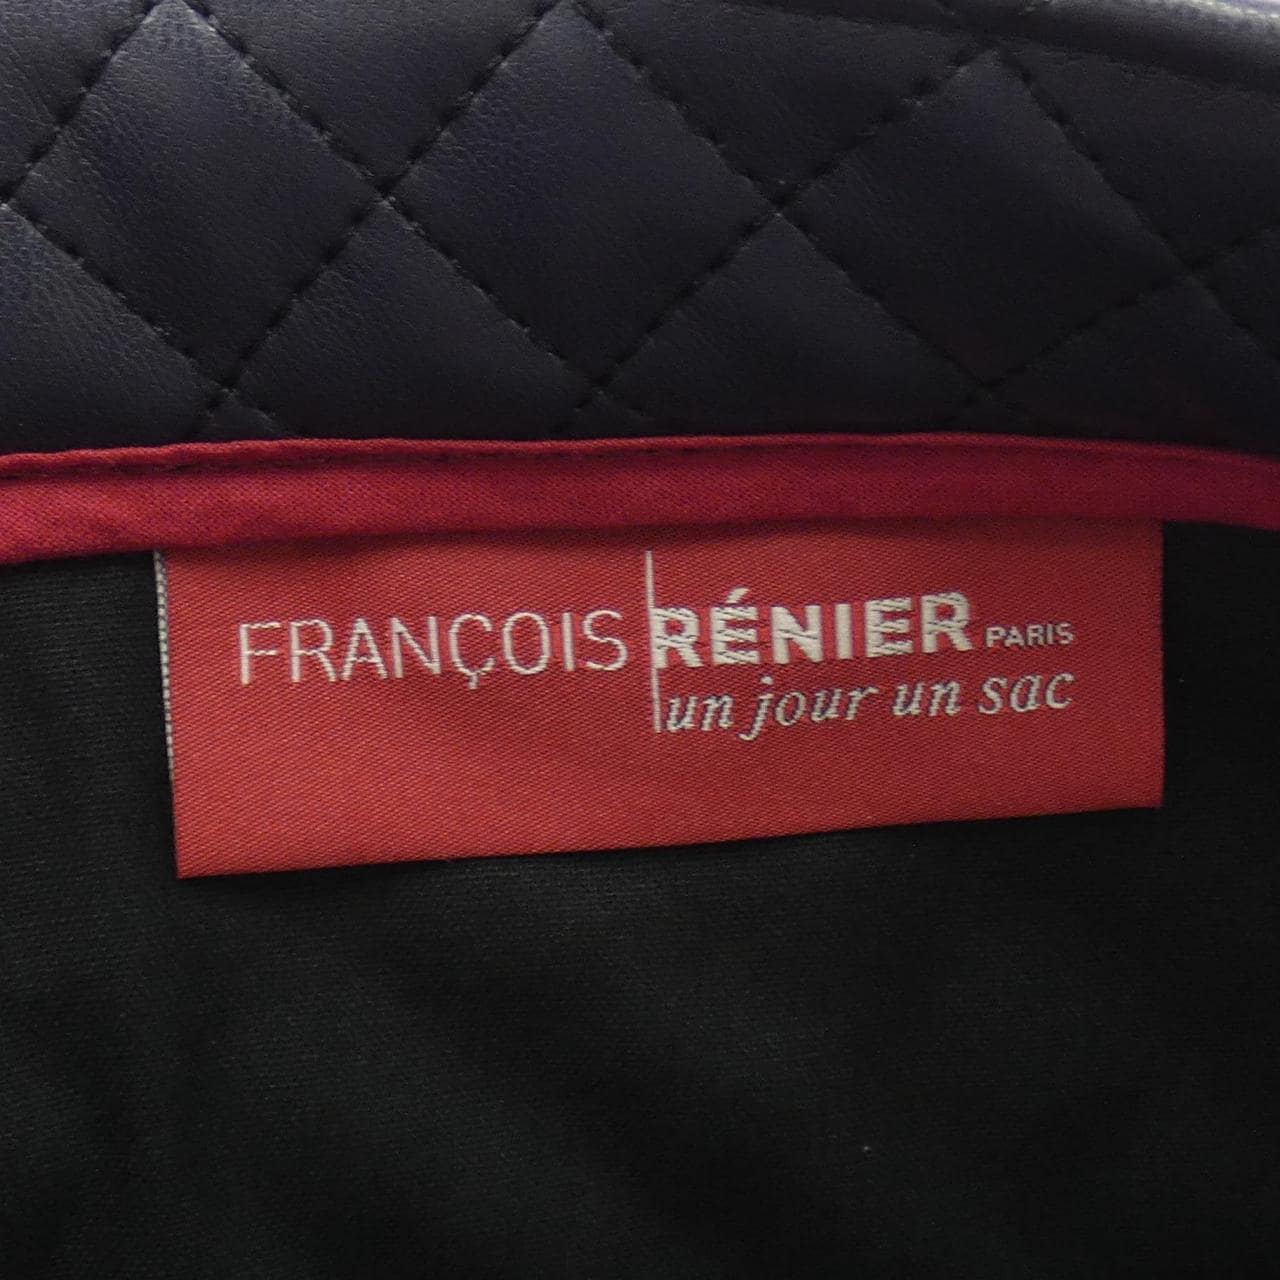 FRANCOIS RENIER BAG